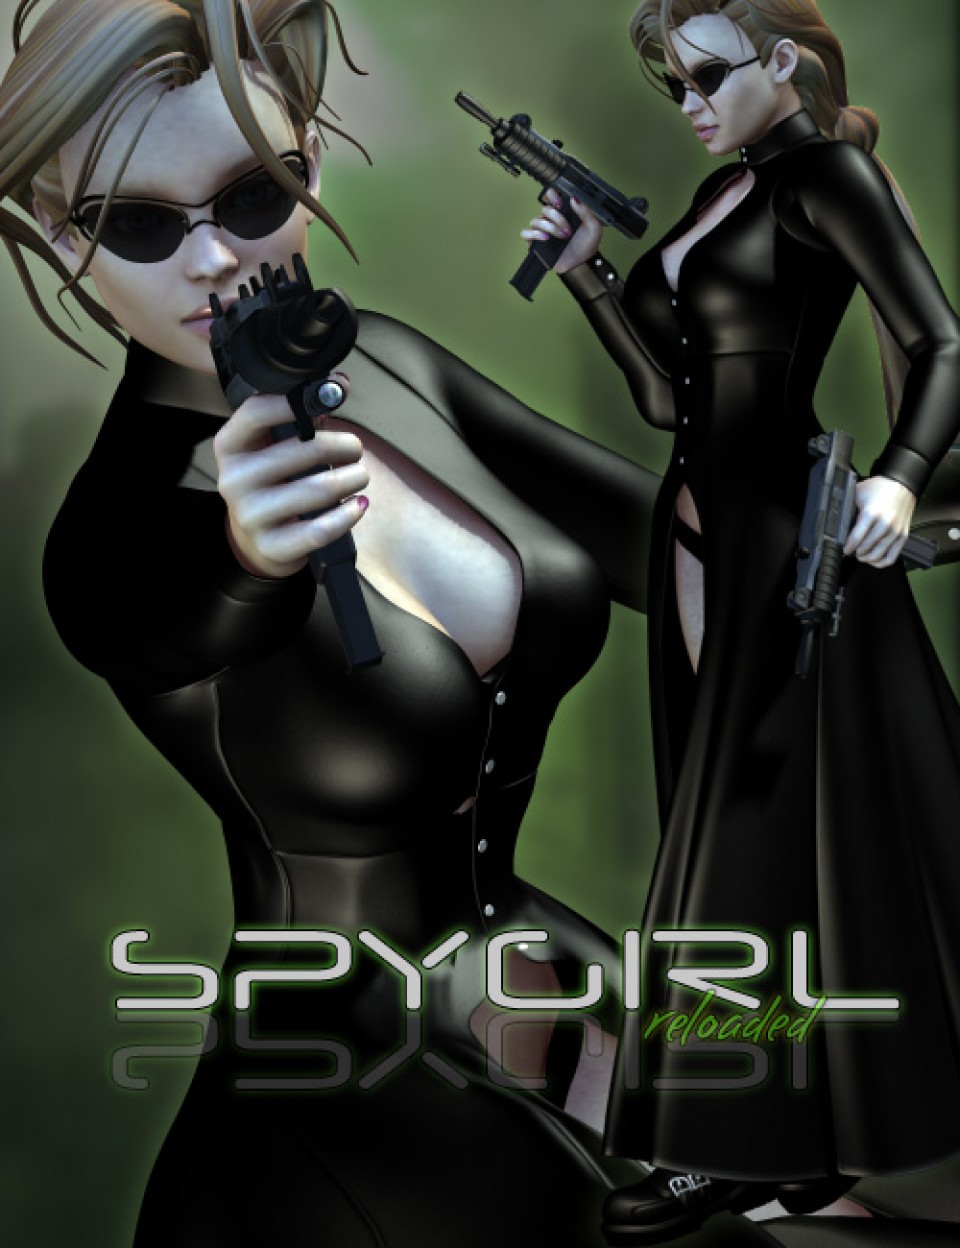 SpyGirl Reloaded